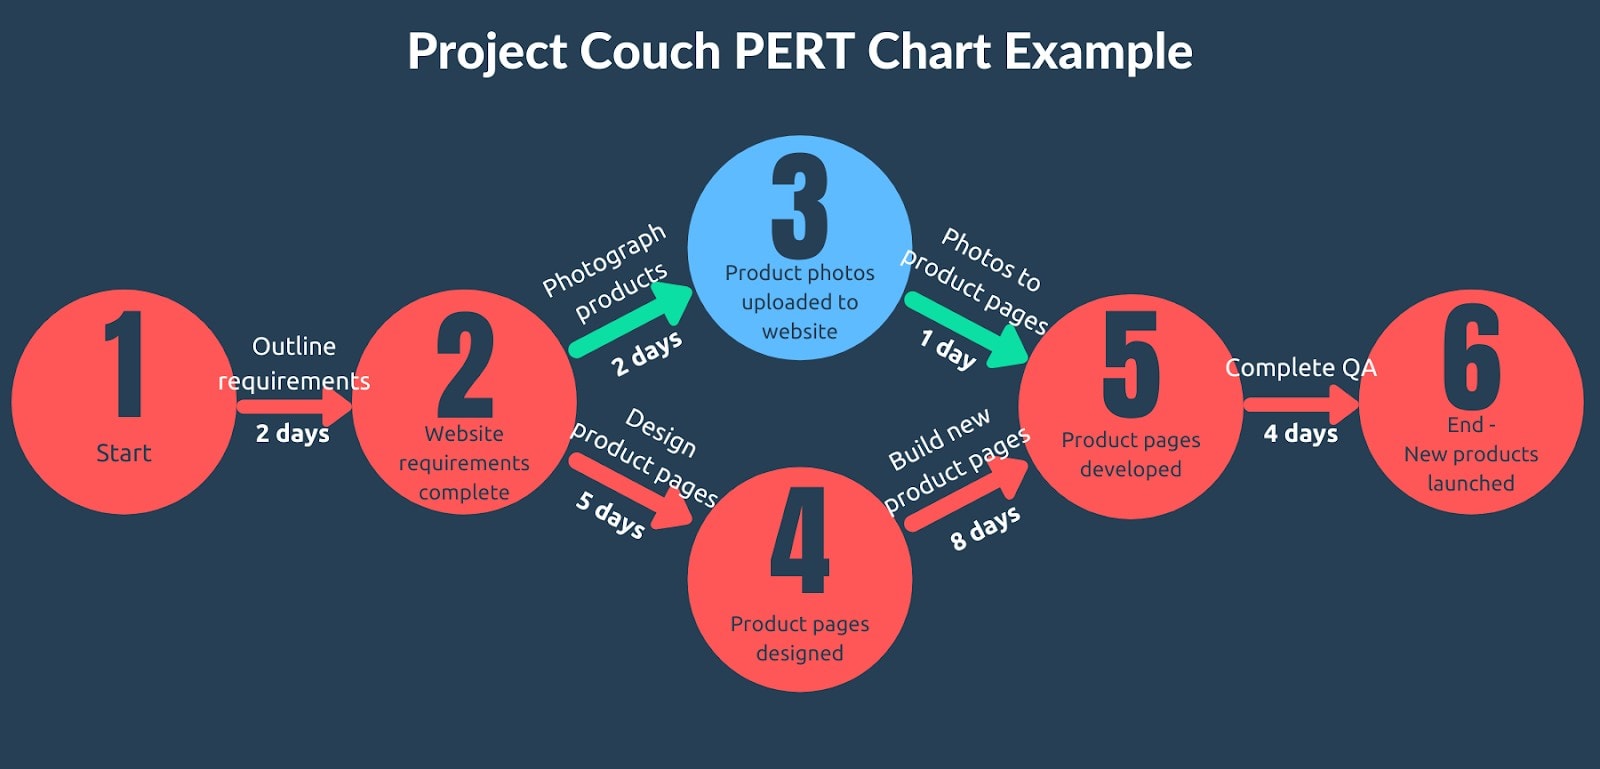 Critical path on PERT chart